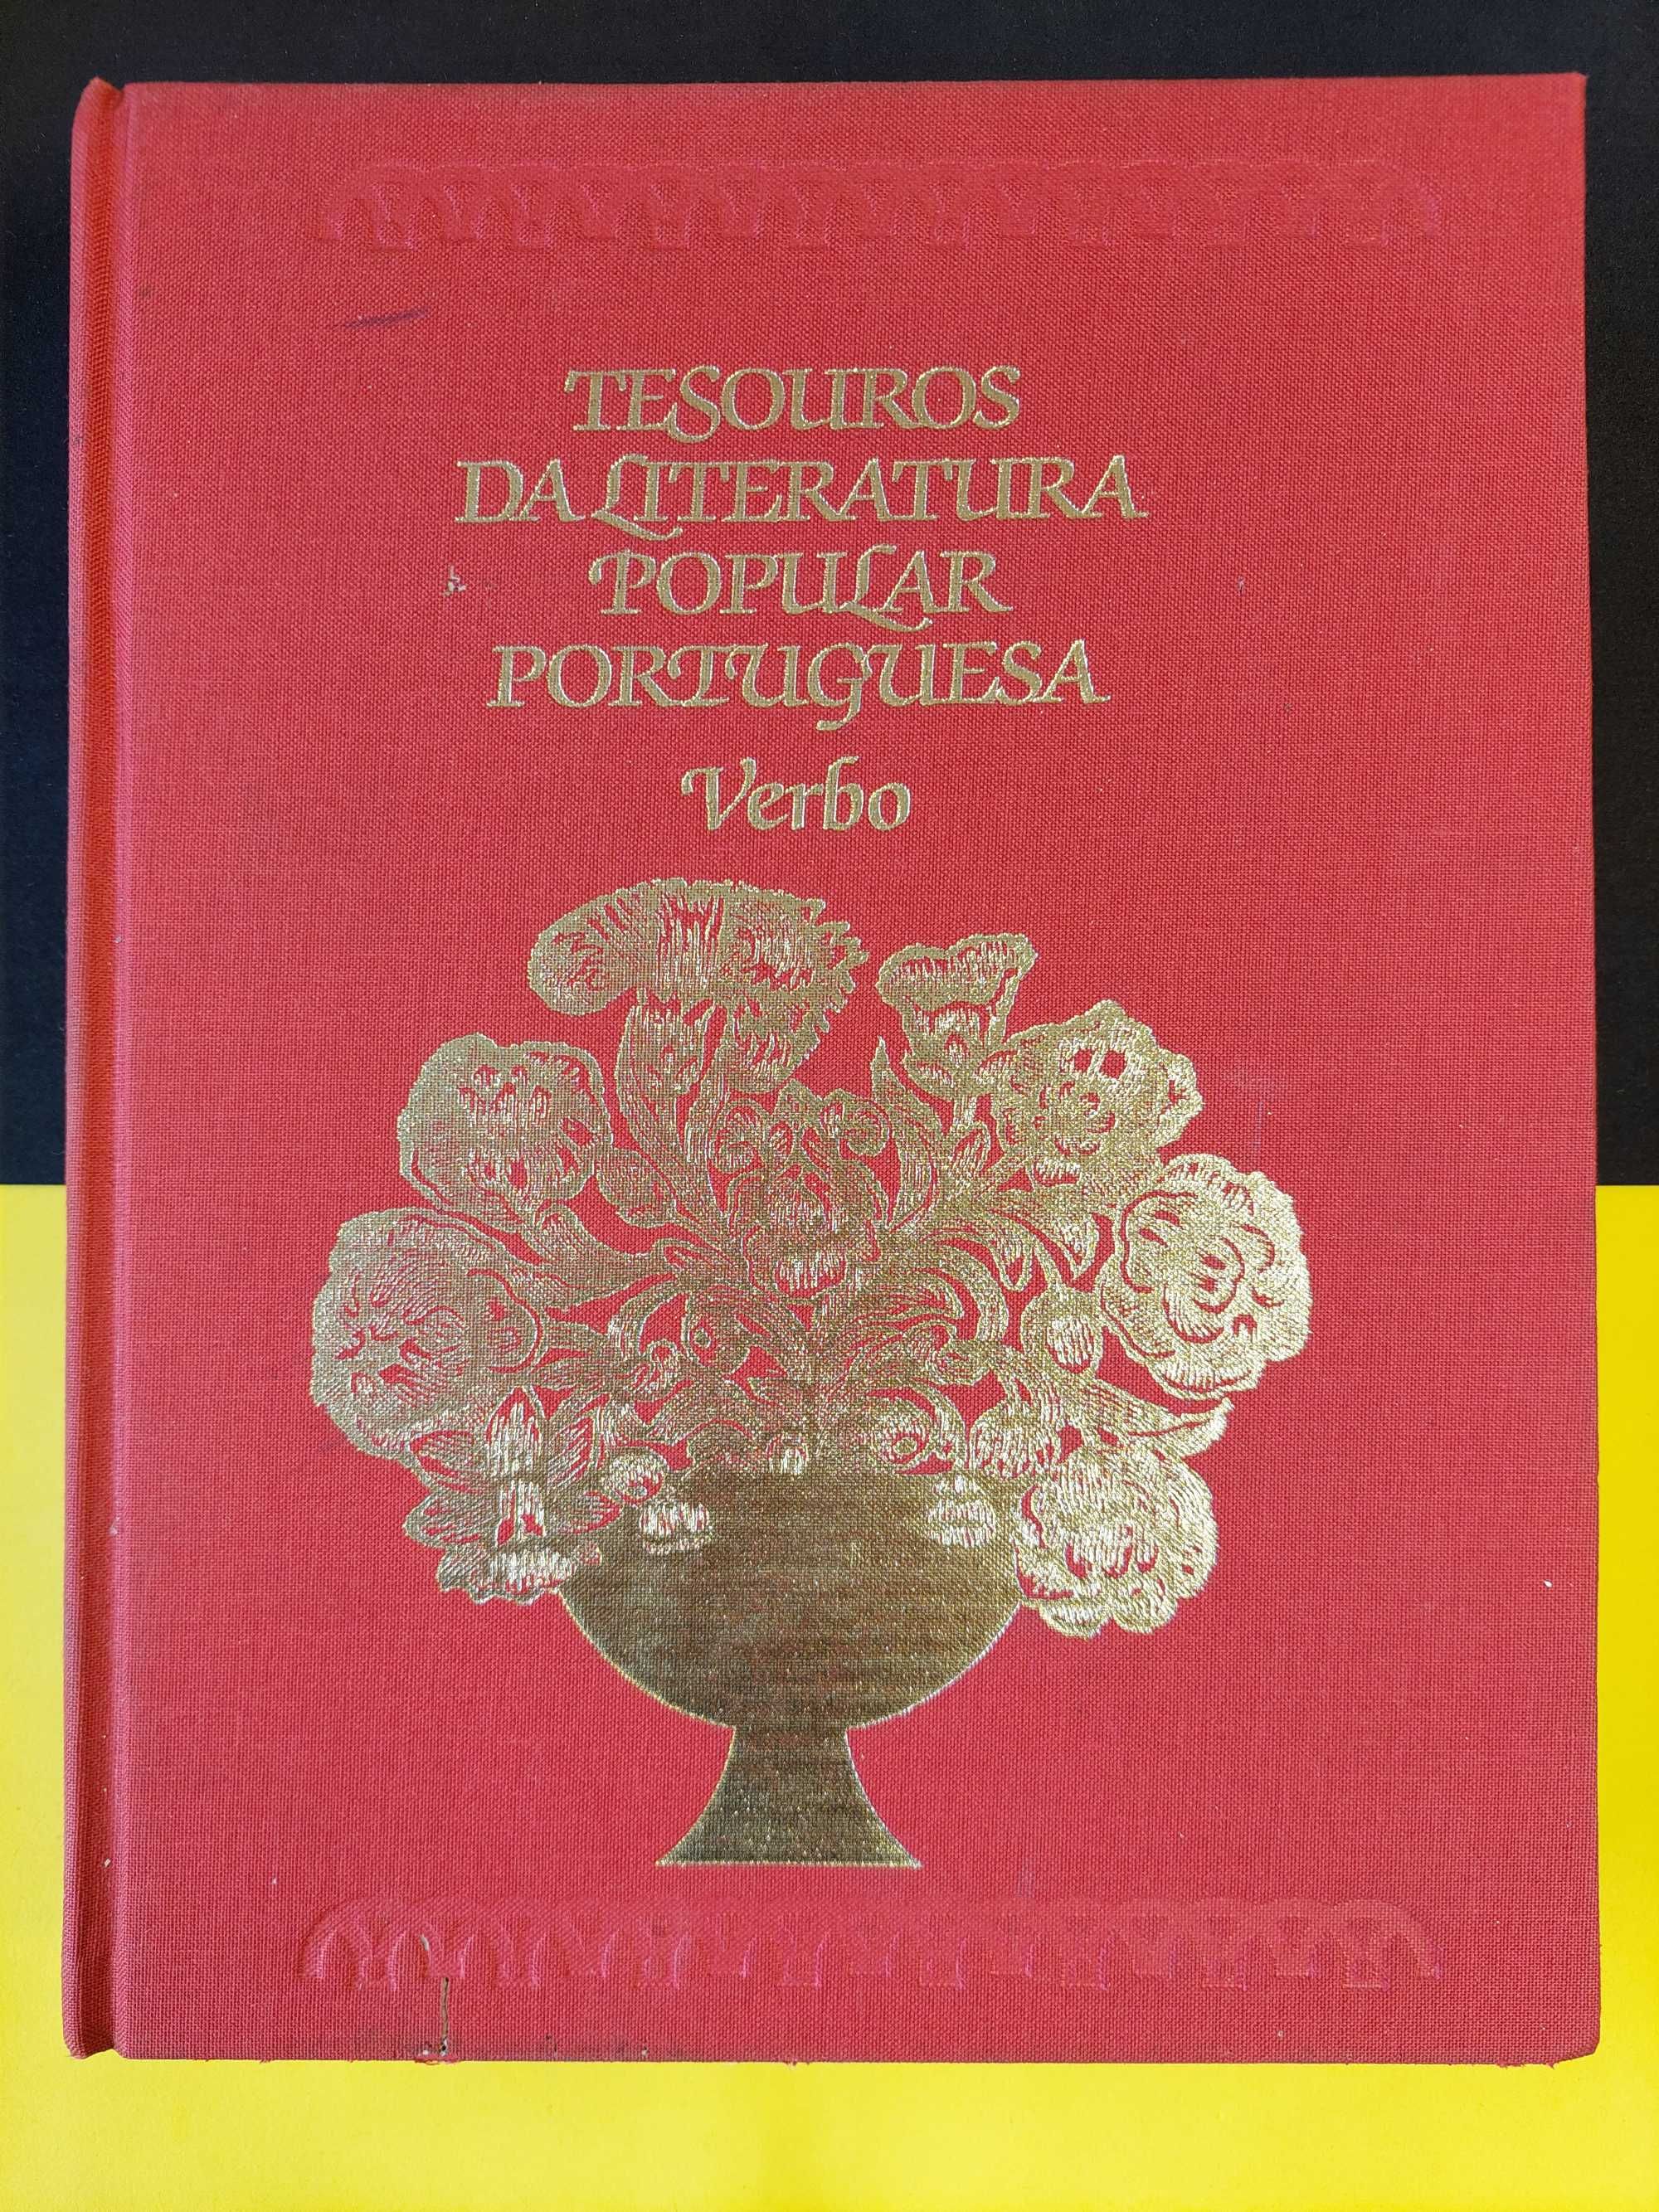 António Viana - Tesouros da literatura popular portuguesa